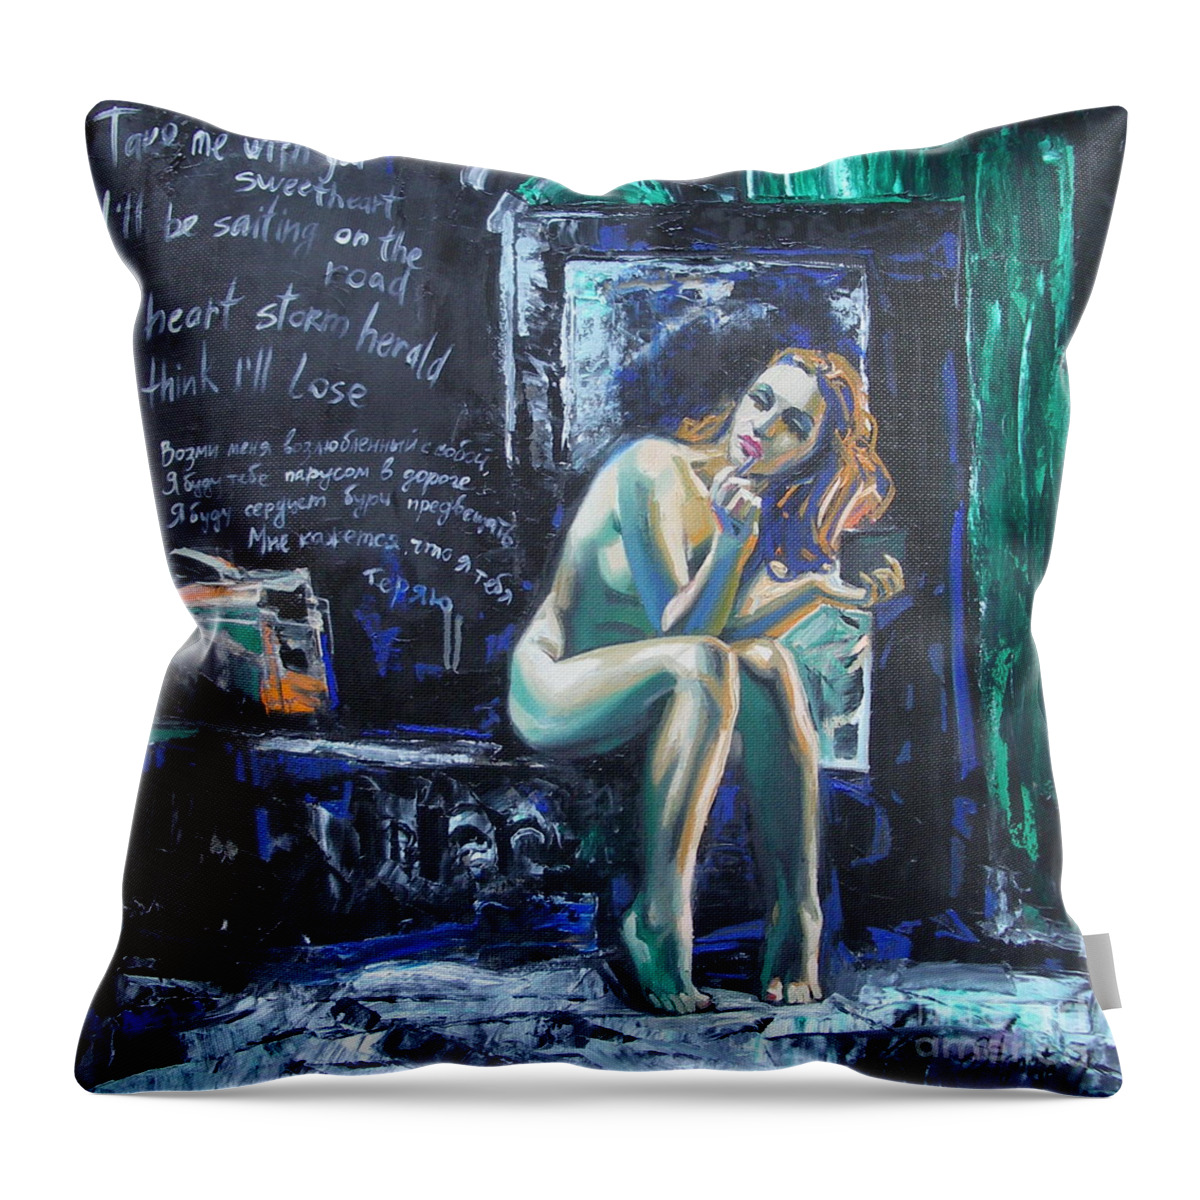 Ignatenko Throw Pillow featuring the painting Expectancies by Sergey Ignatenko